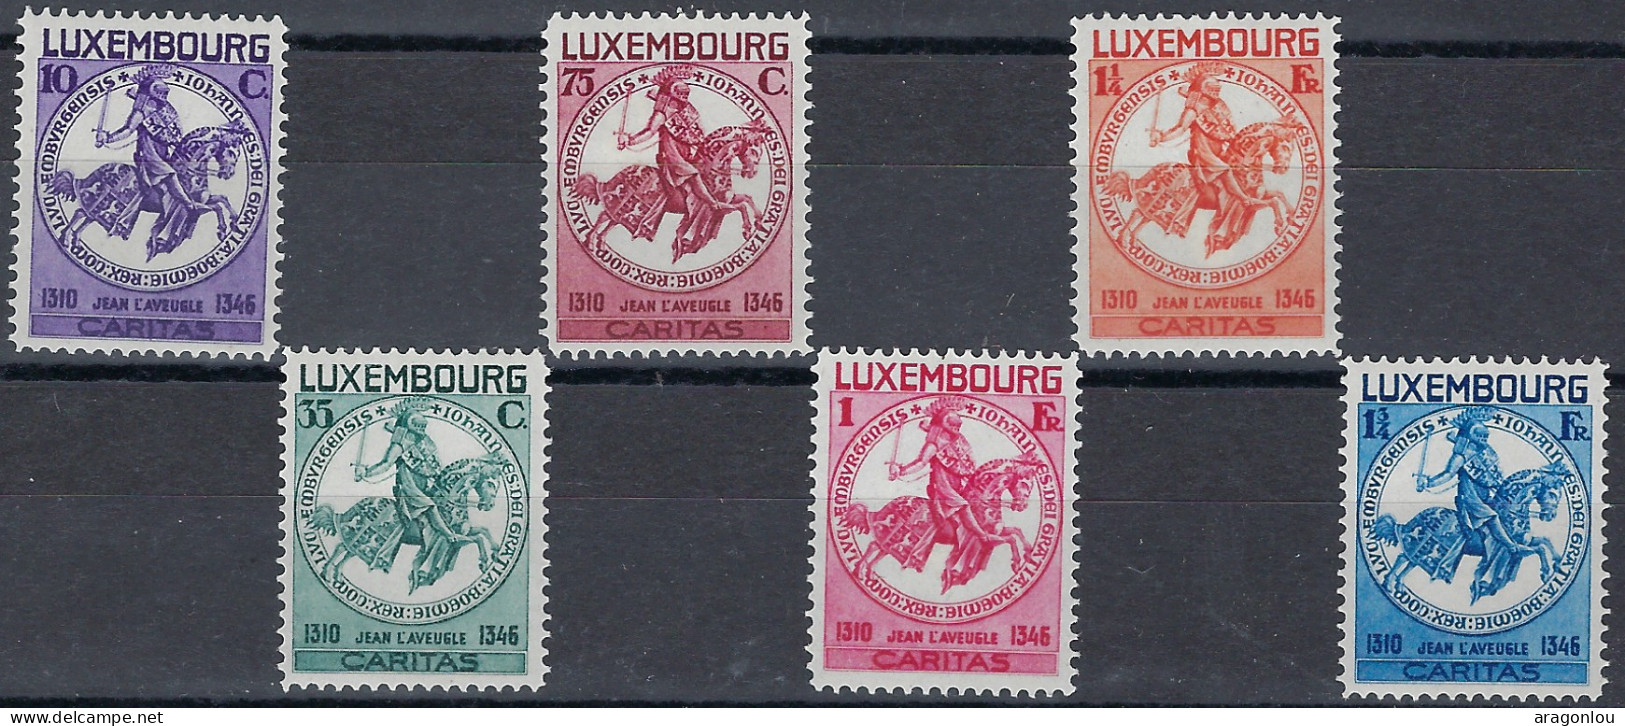 Luxembourg - Luxemburg - Timbres - 1934   Jean L'Aveugle   Série  * - Usati